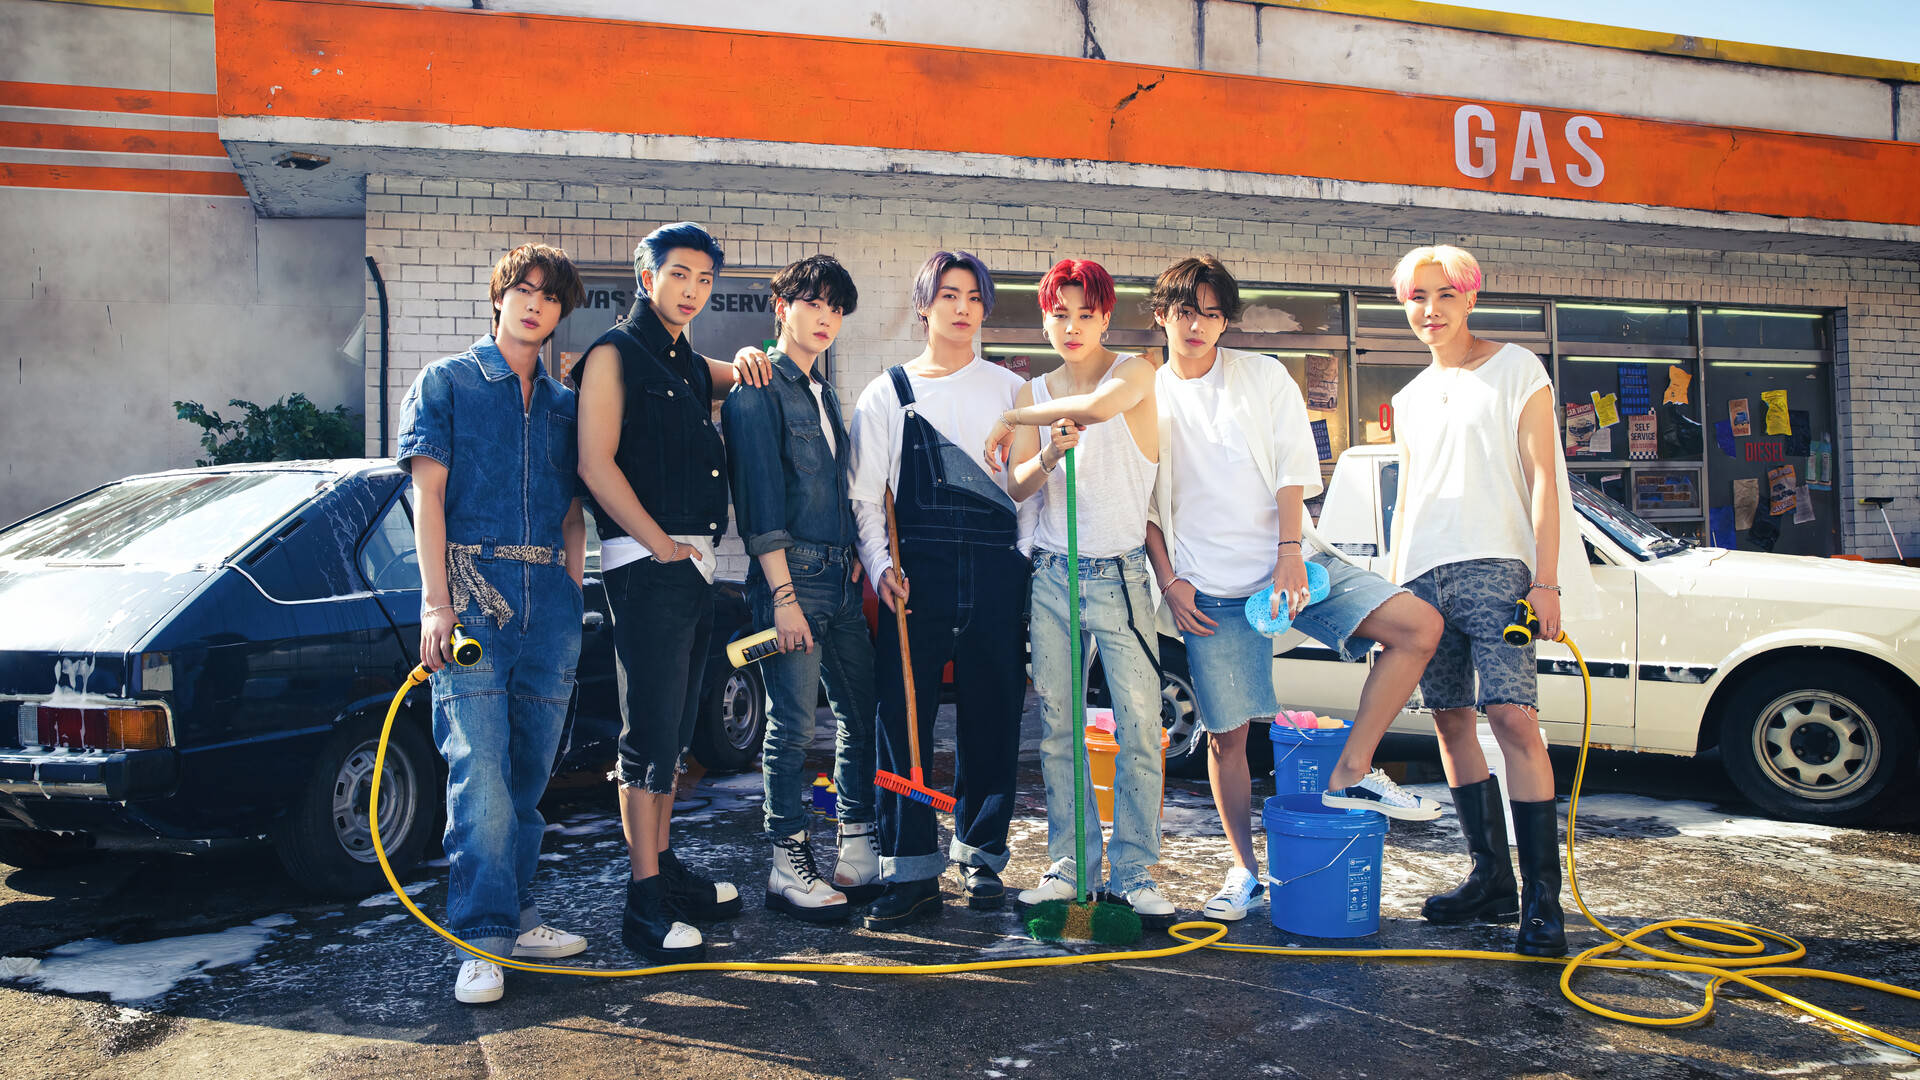 Download BTS Group Photo At Carwash Station Wallpaper | Wallpapers.com